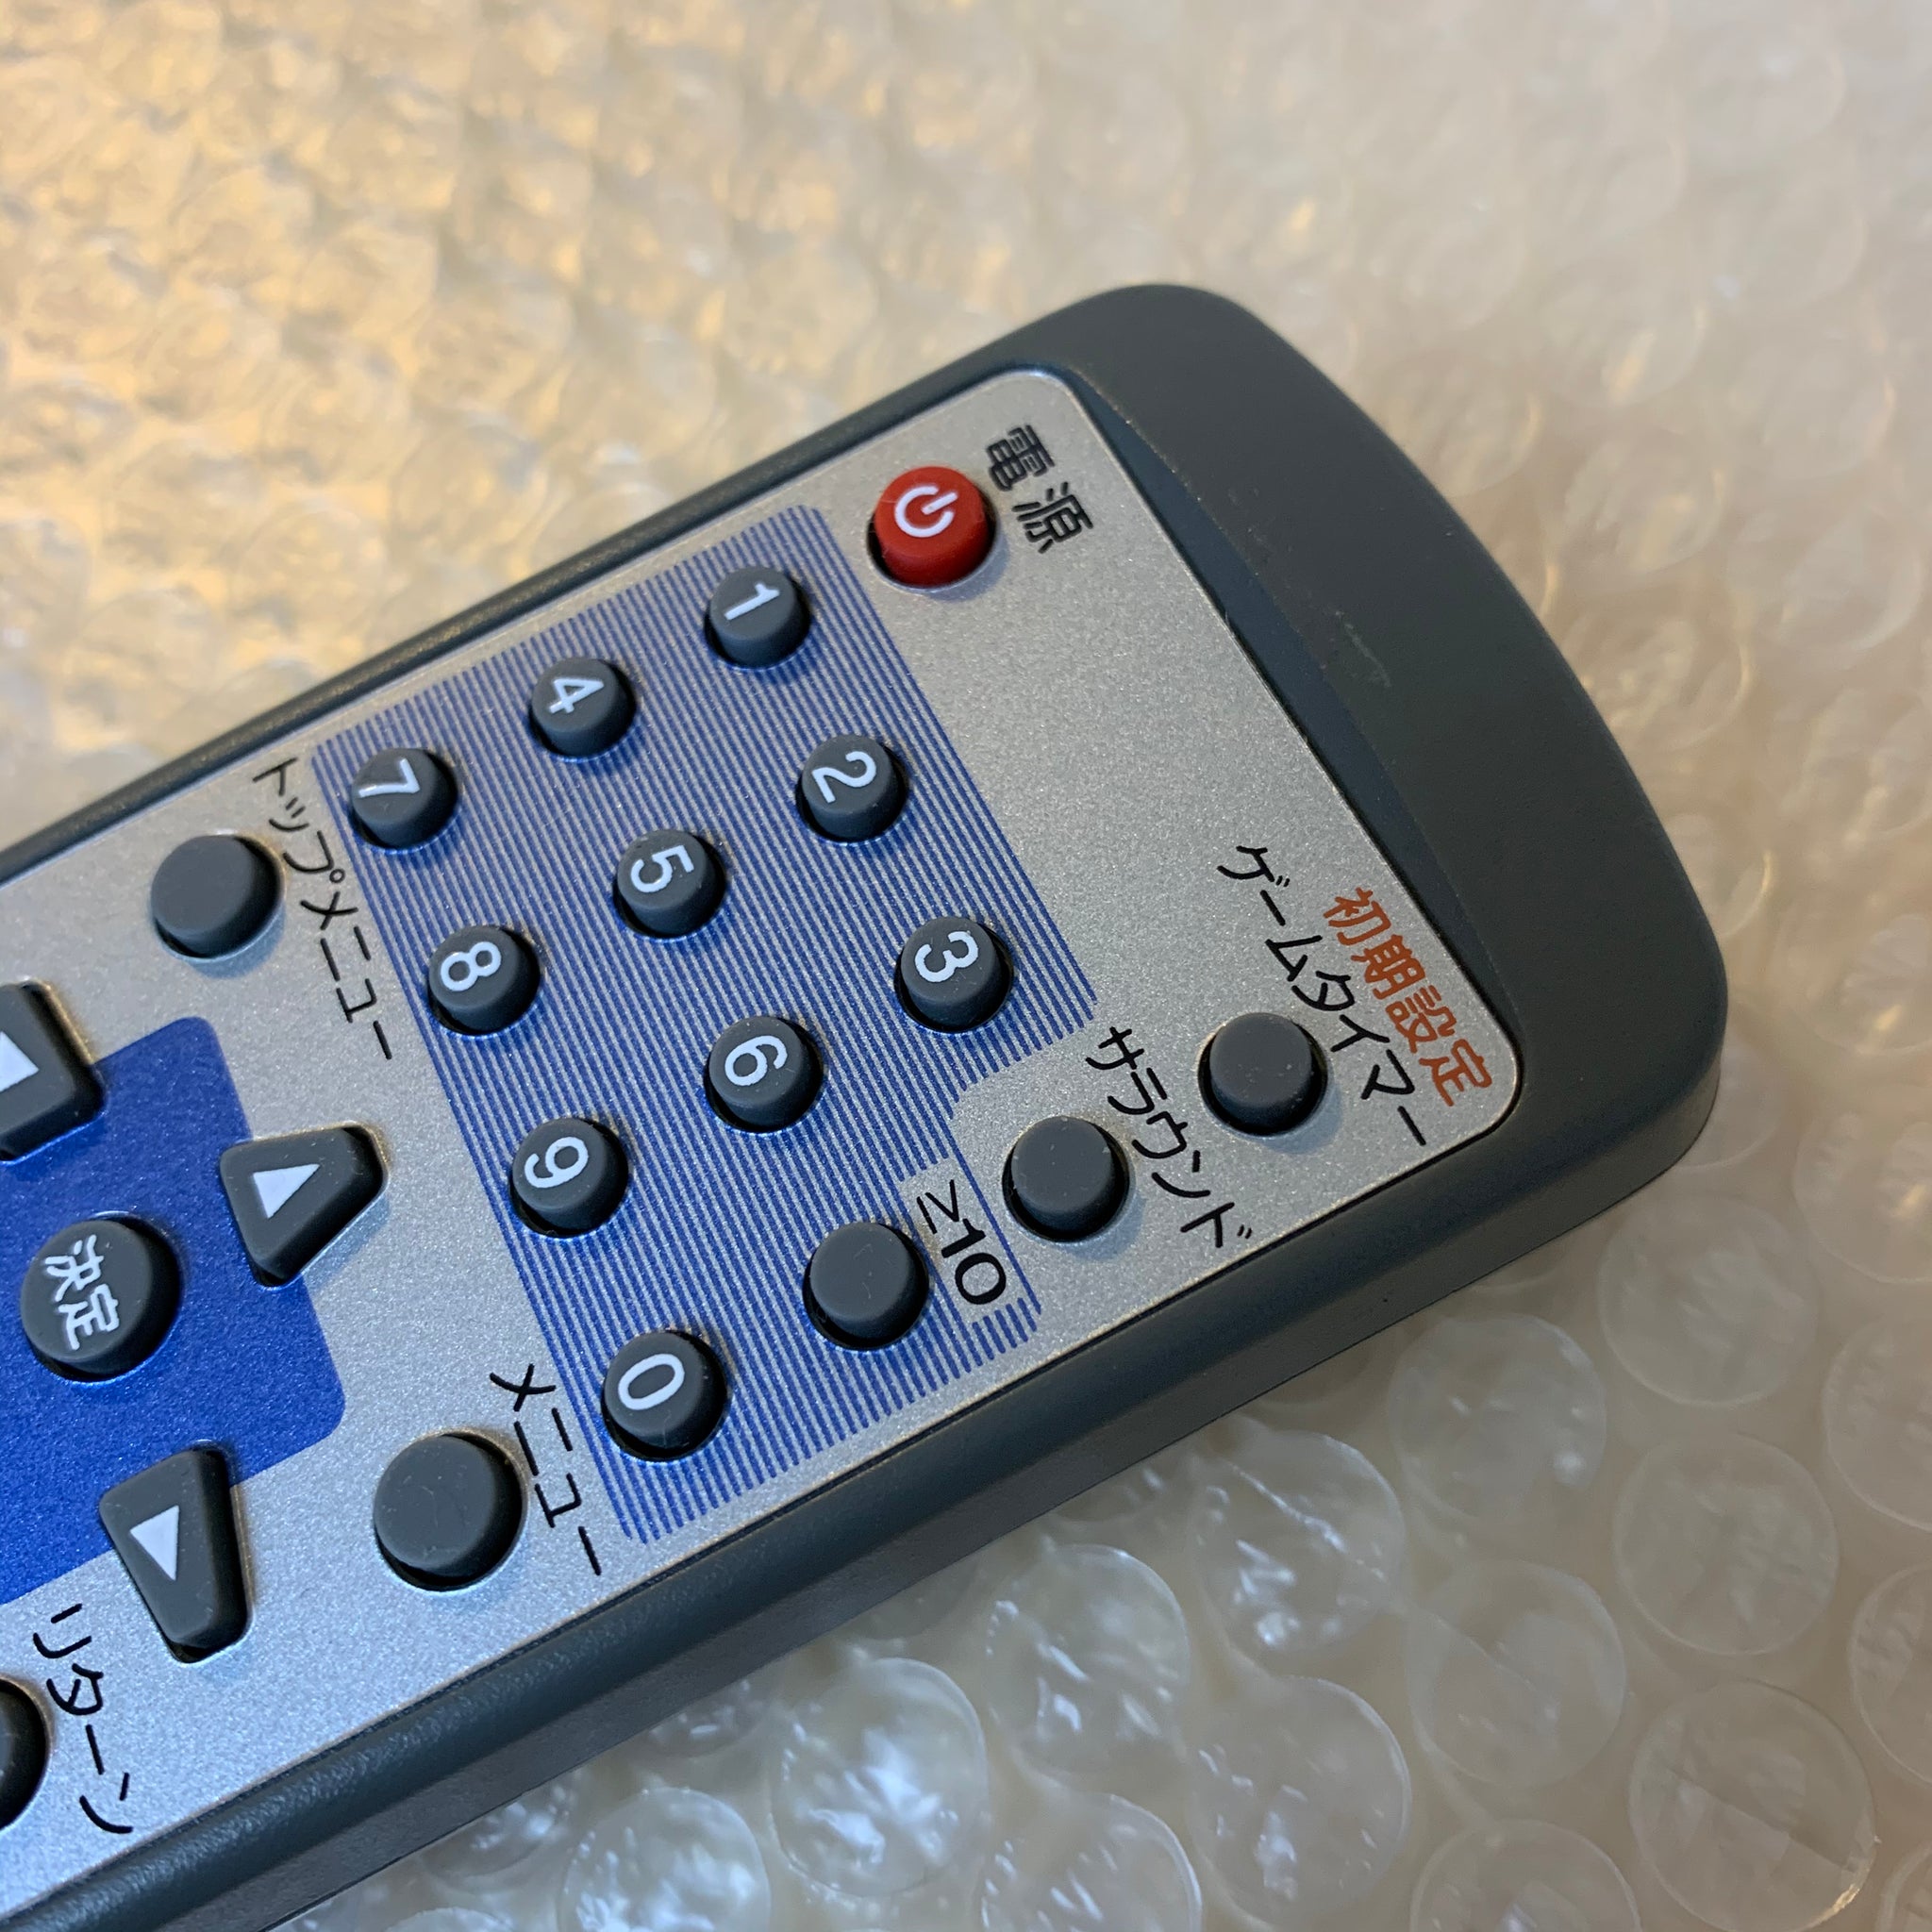 Remote Controller For Panasonic Q Sl Gc10 Retroasia